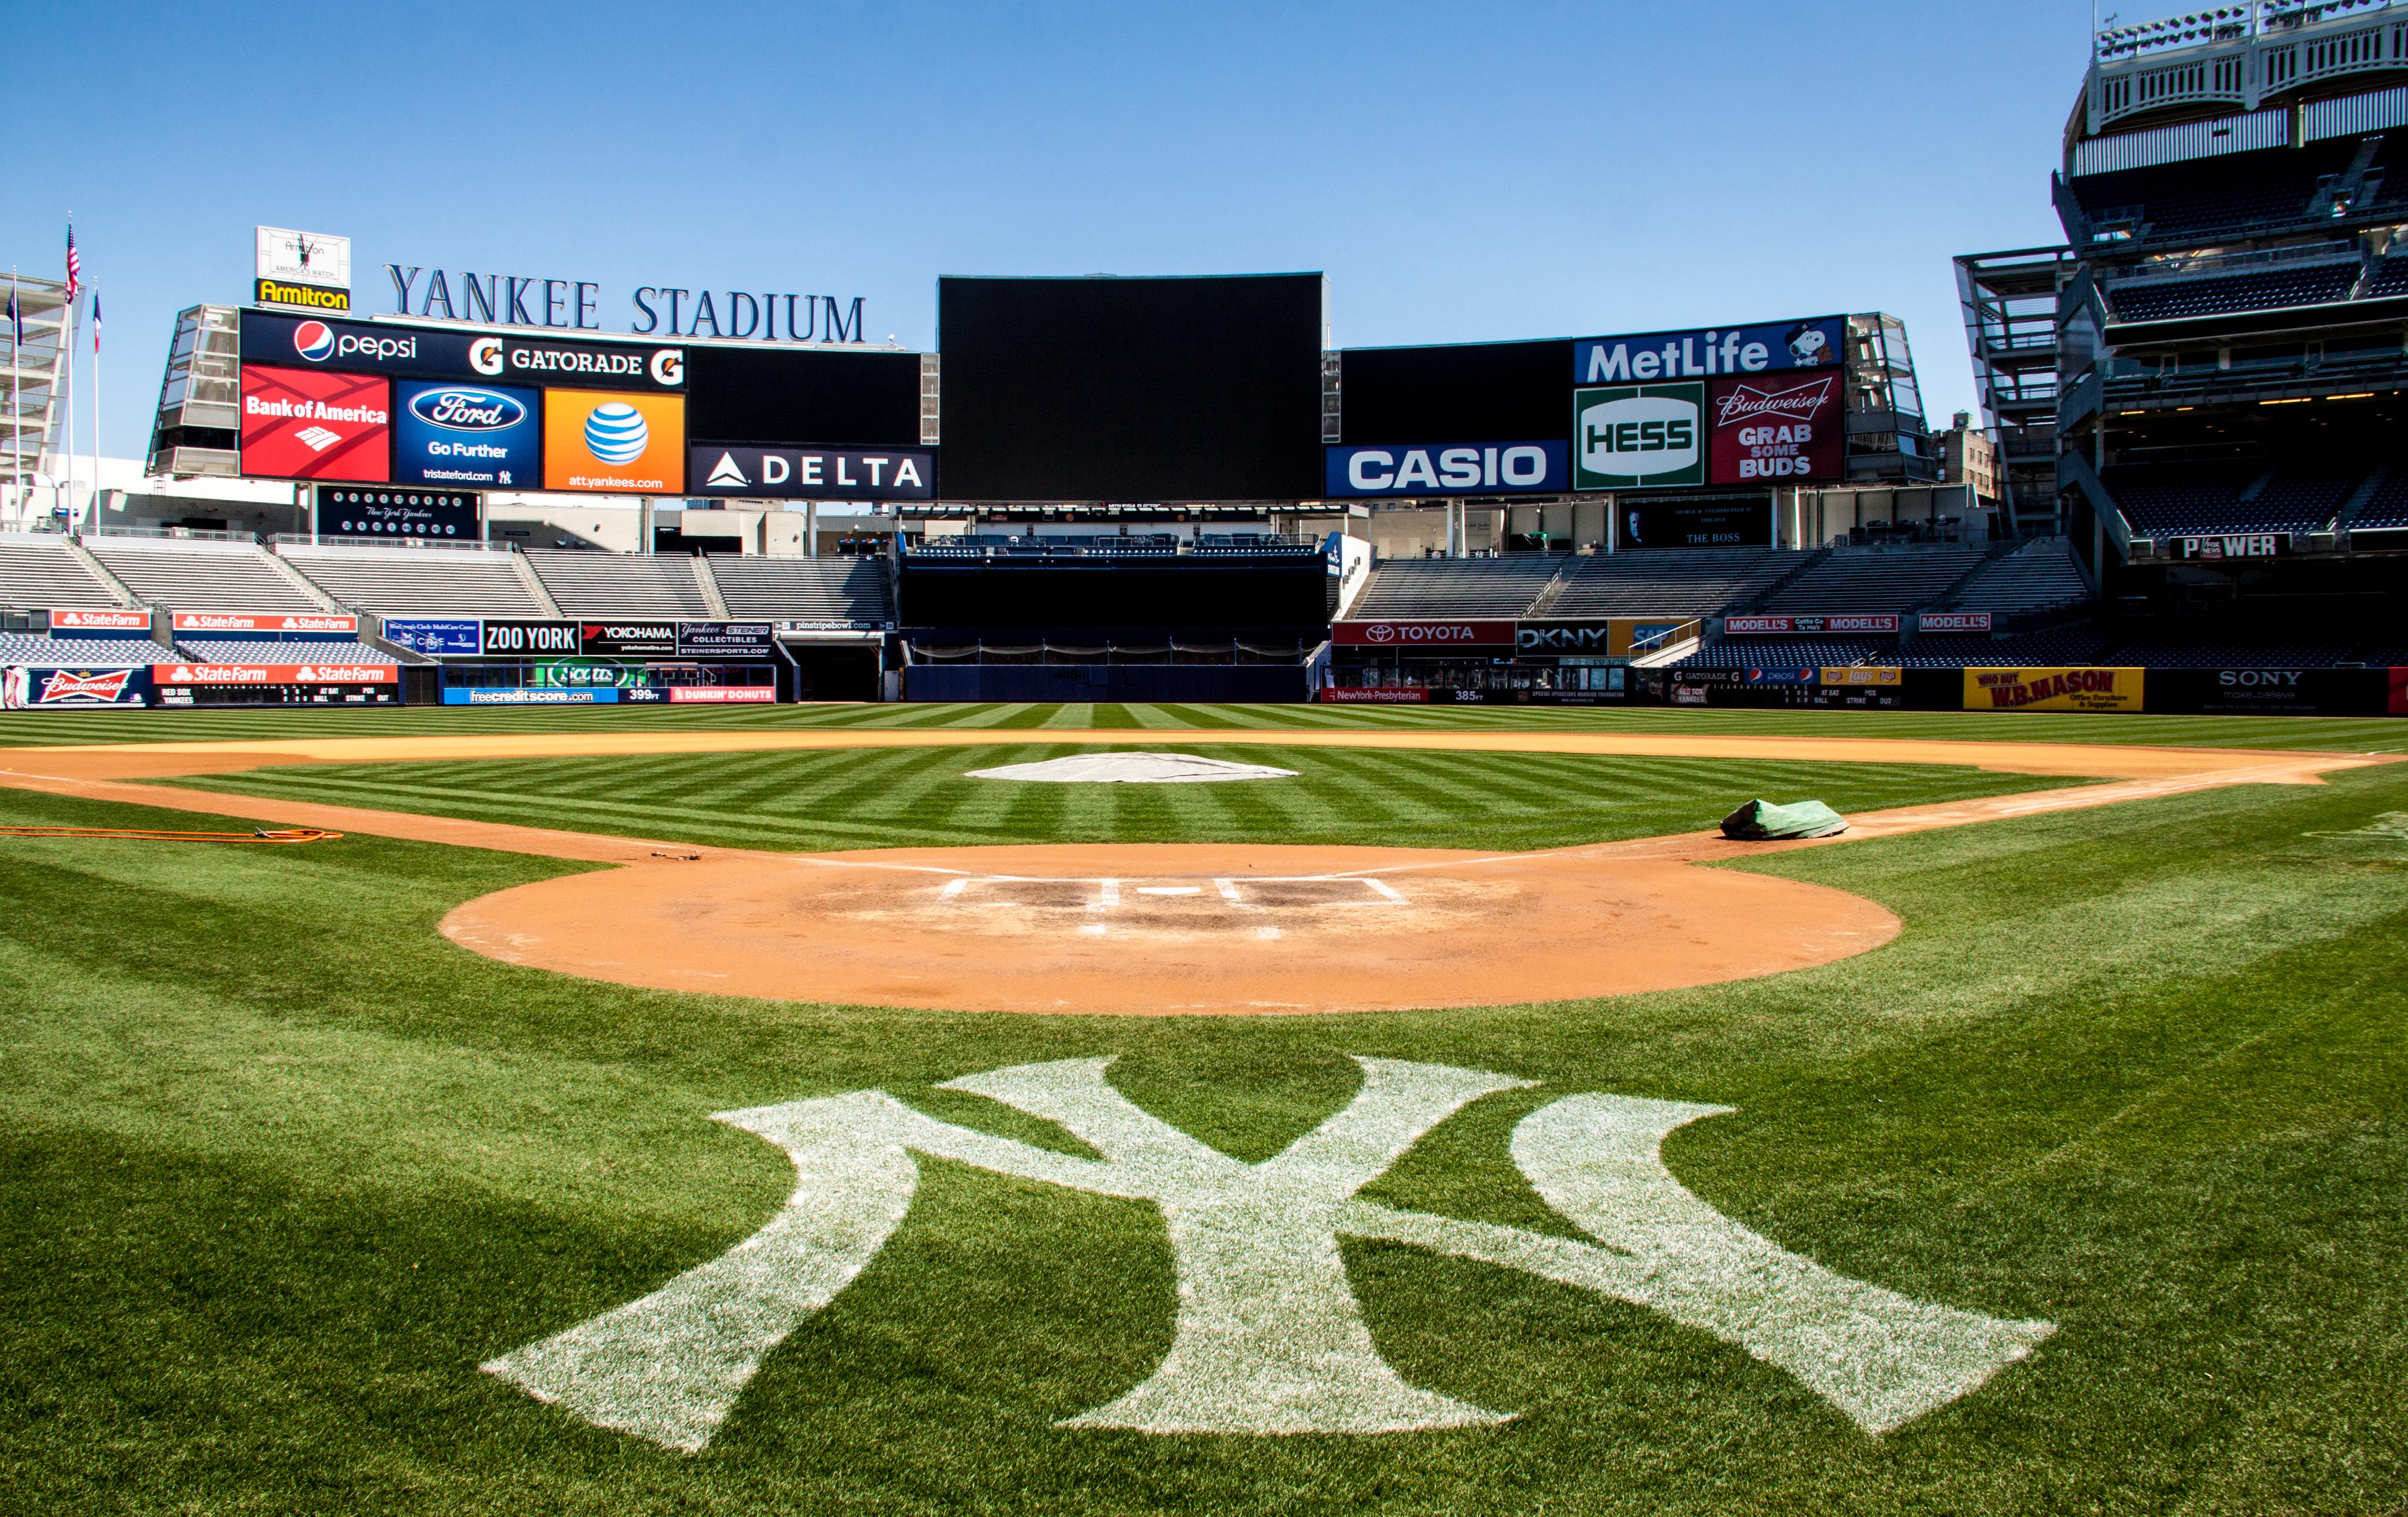 NY Yankees Opening Day 2016 photo:topcheddarct.blogspot.com